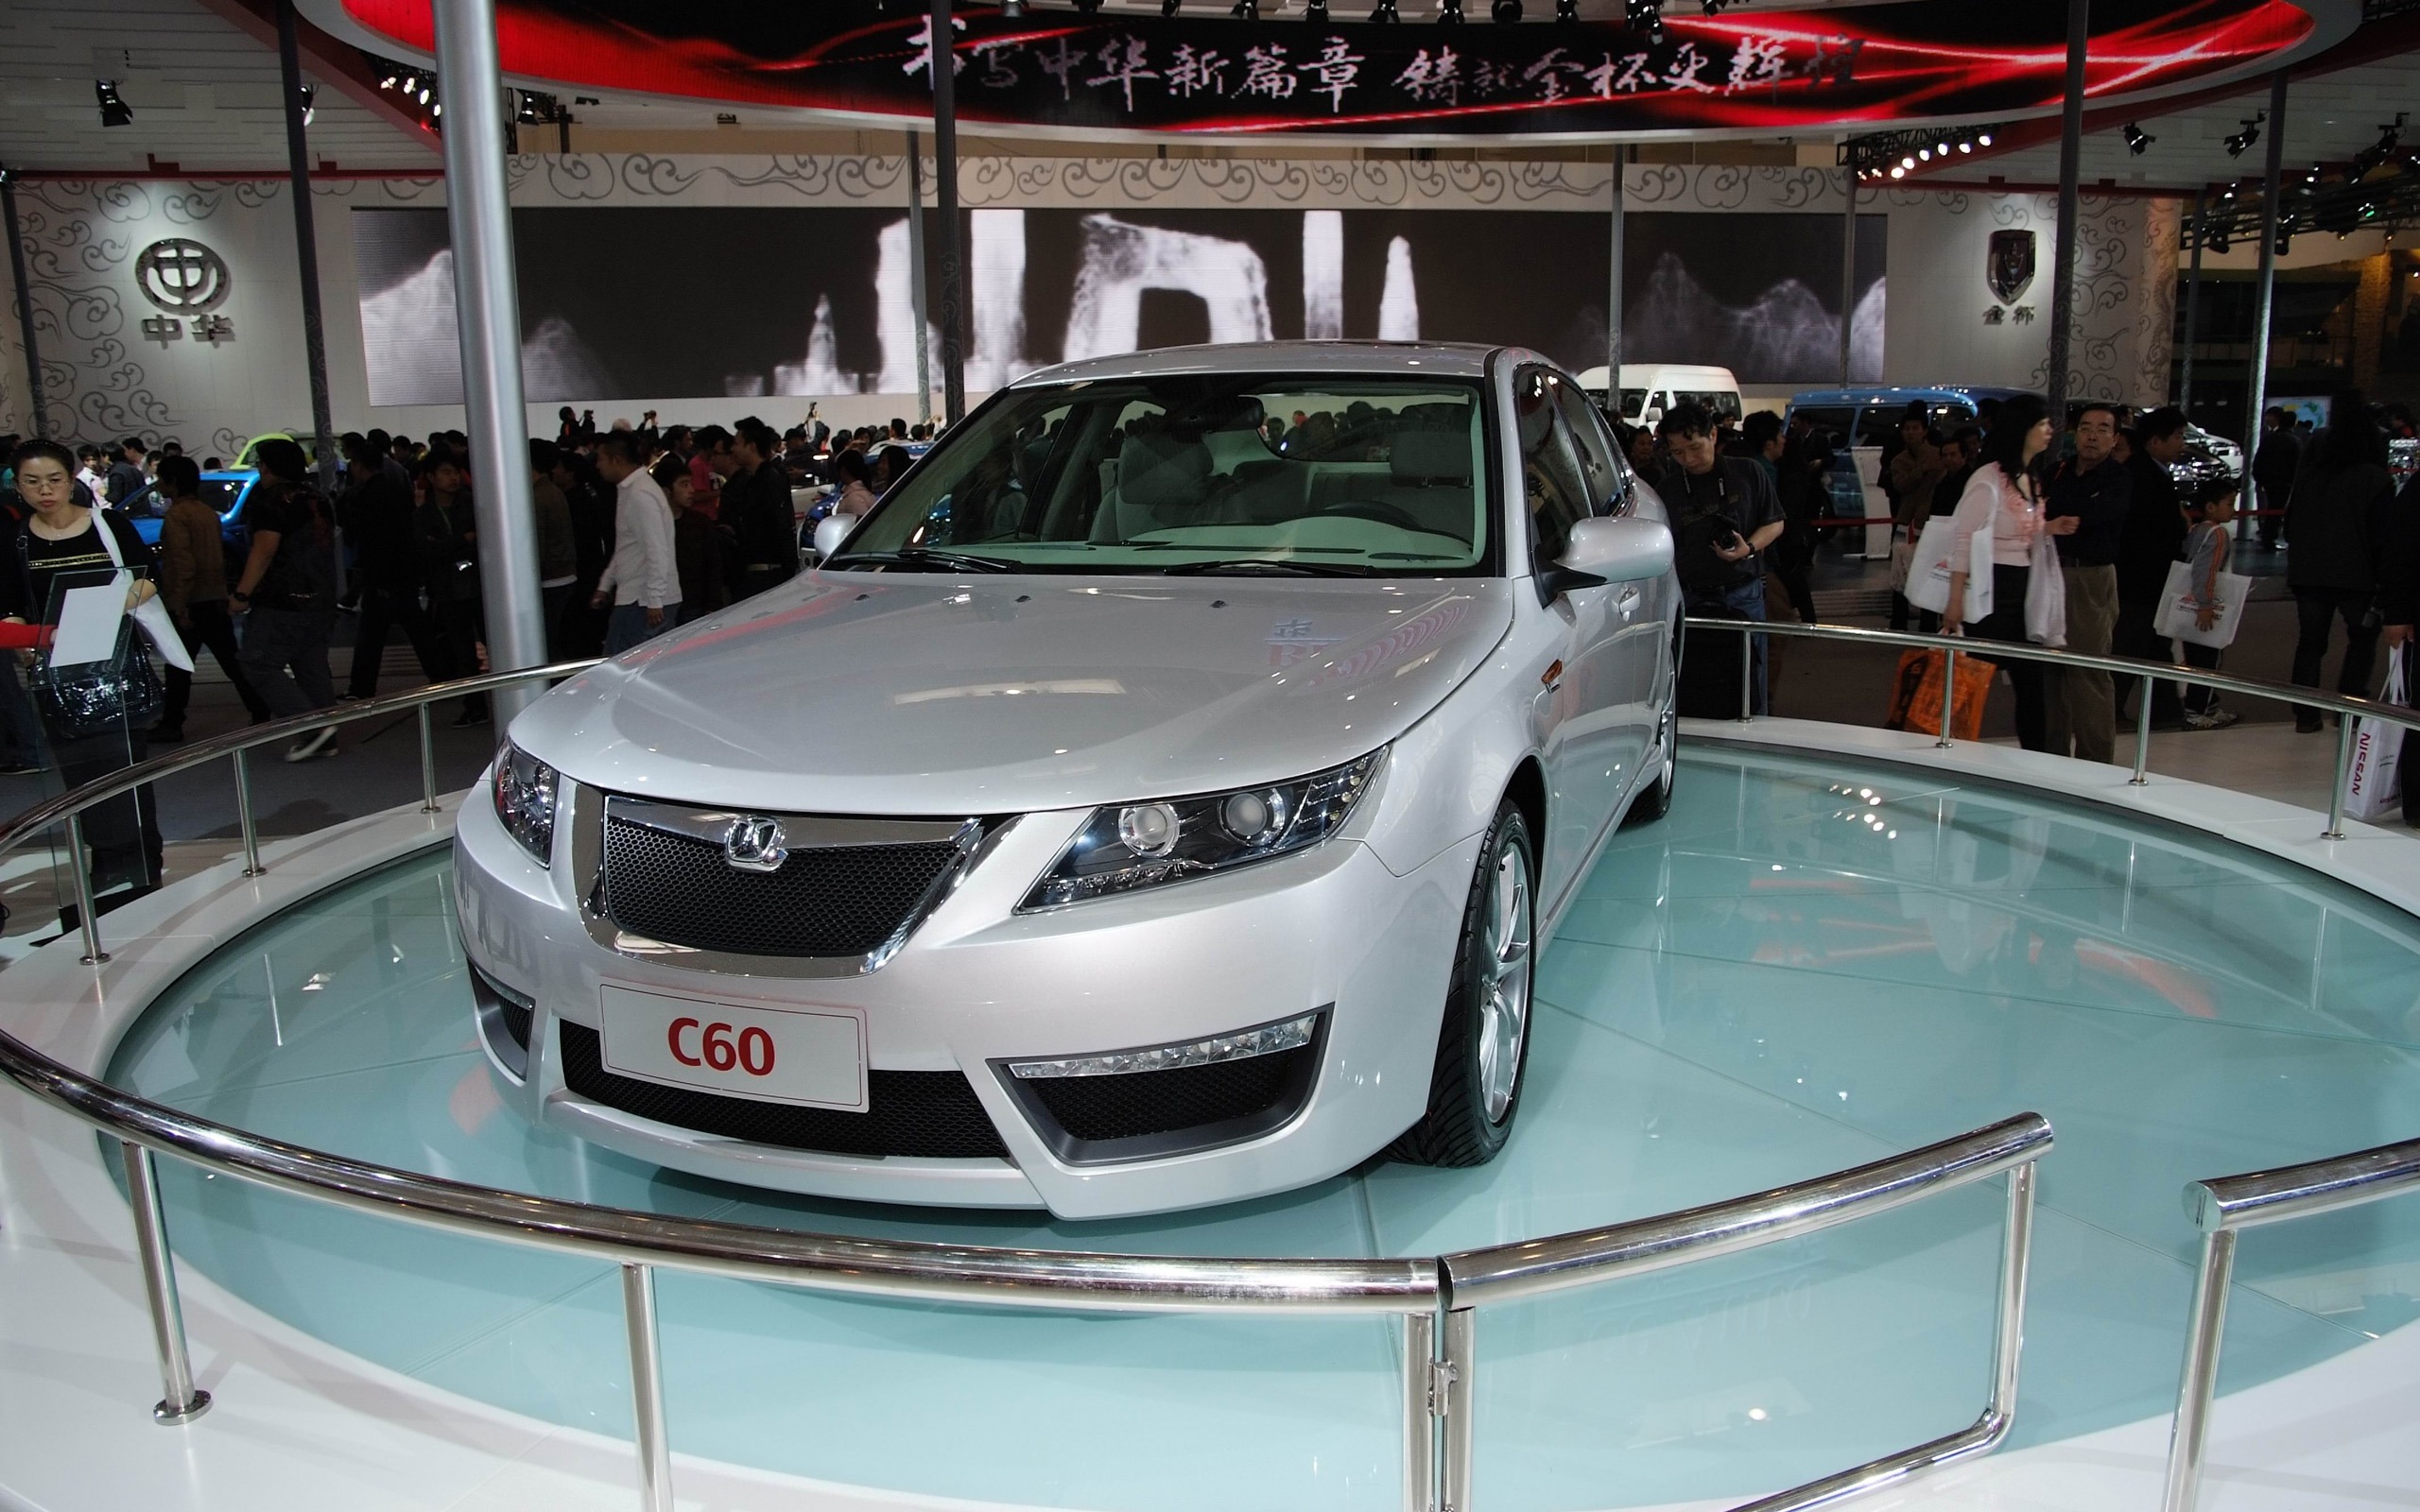 2010 Beijing International Auto Show Heung Che (rebar works) #9 - 2560x1600